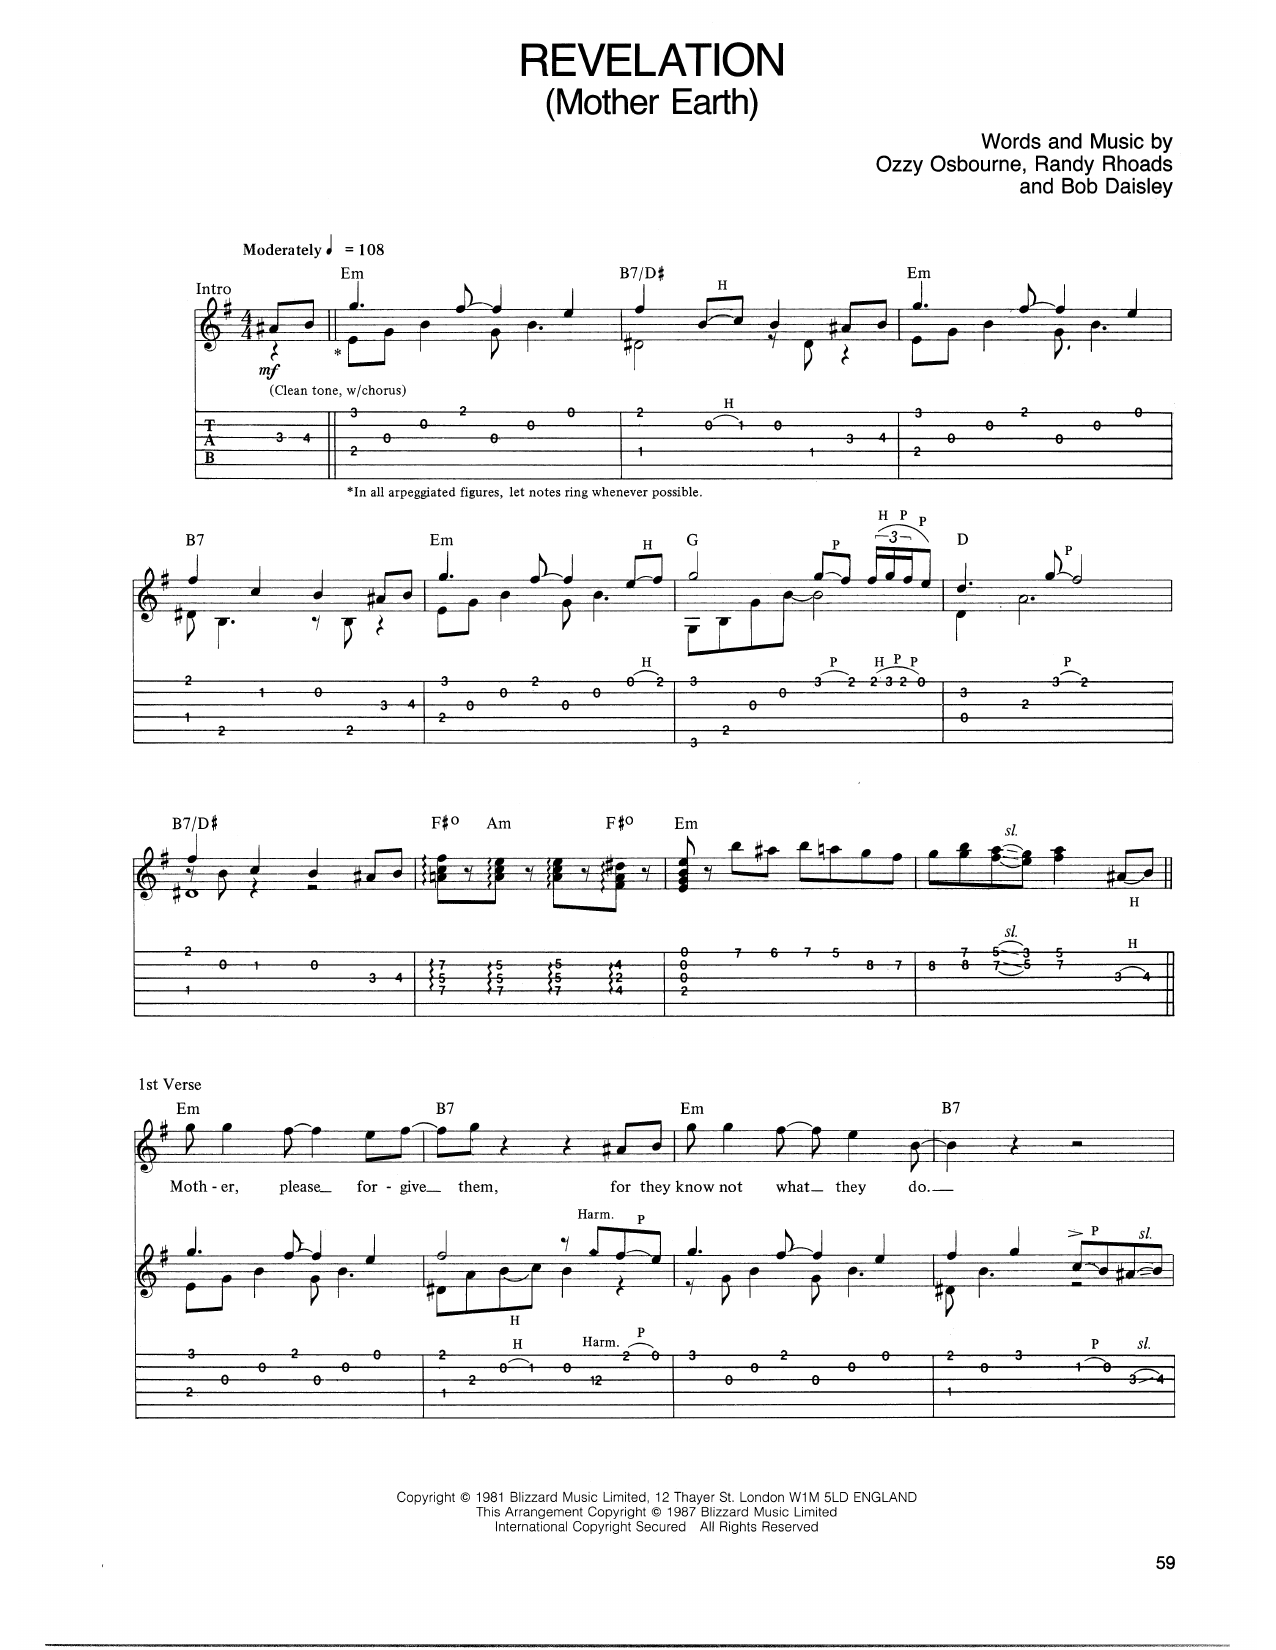 Ozzy Osbourne Revelation Sheet Music Notes & Chords for Guitar Tab - Download or Print PDF